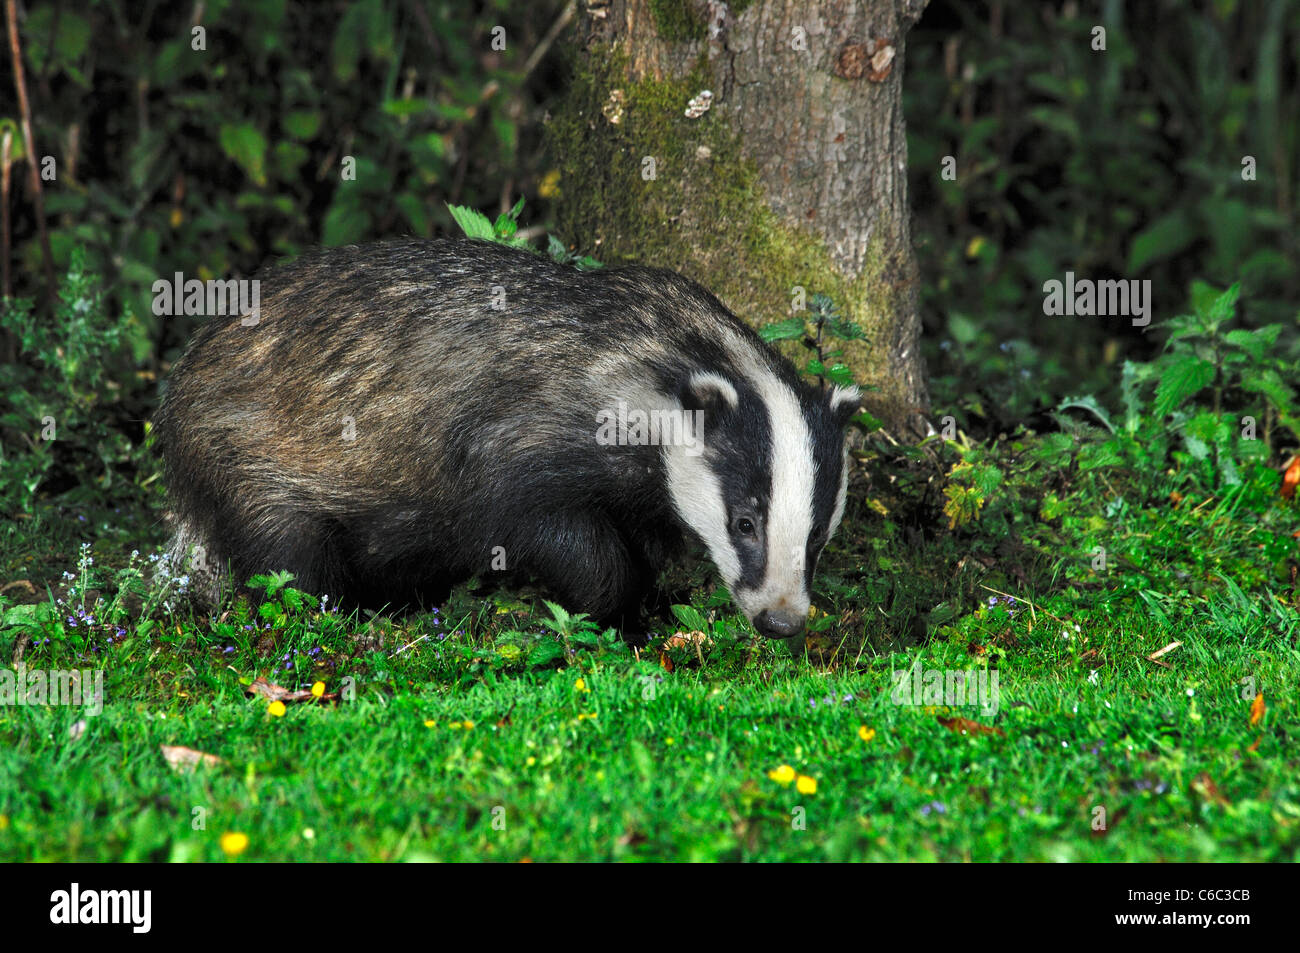 Badger foraging on grass. Dorset, UK July 2008 Stock Photo